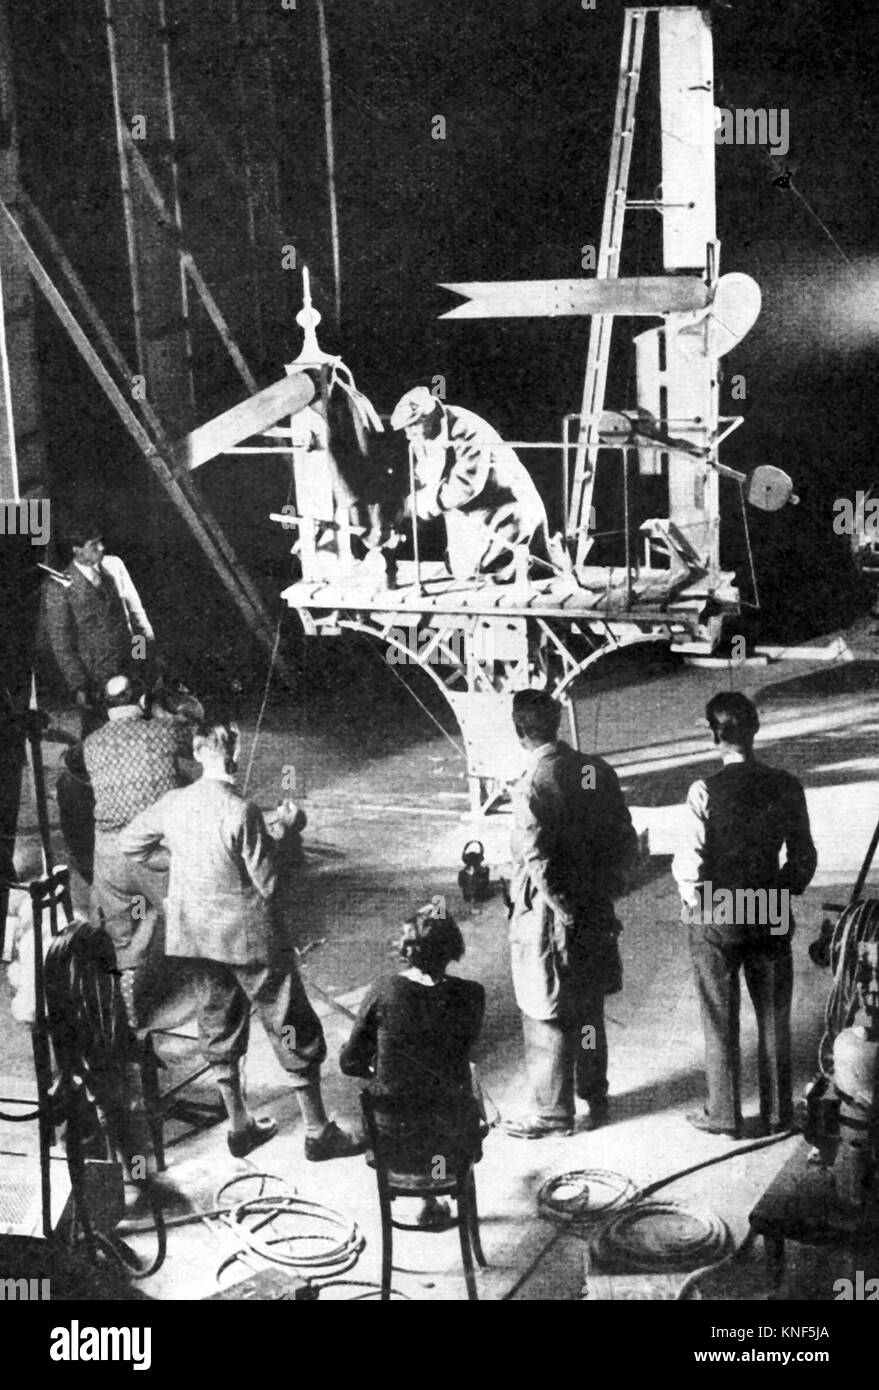 Eine Szene auf Elstree Film Studios, England in den 40er Jahren Stockfoto